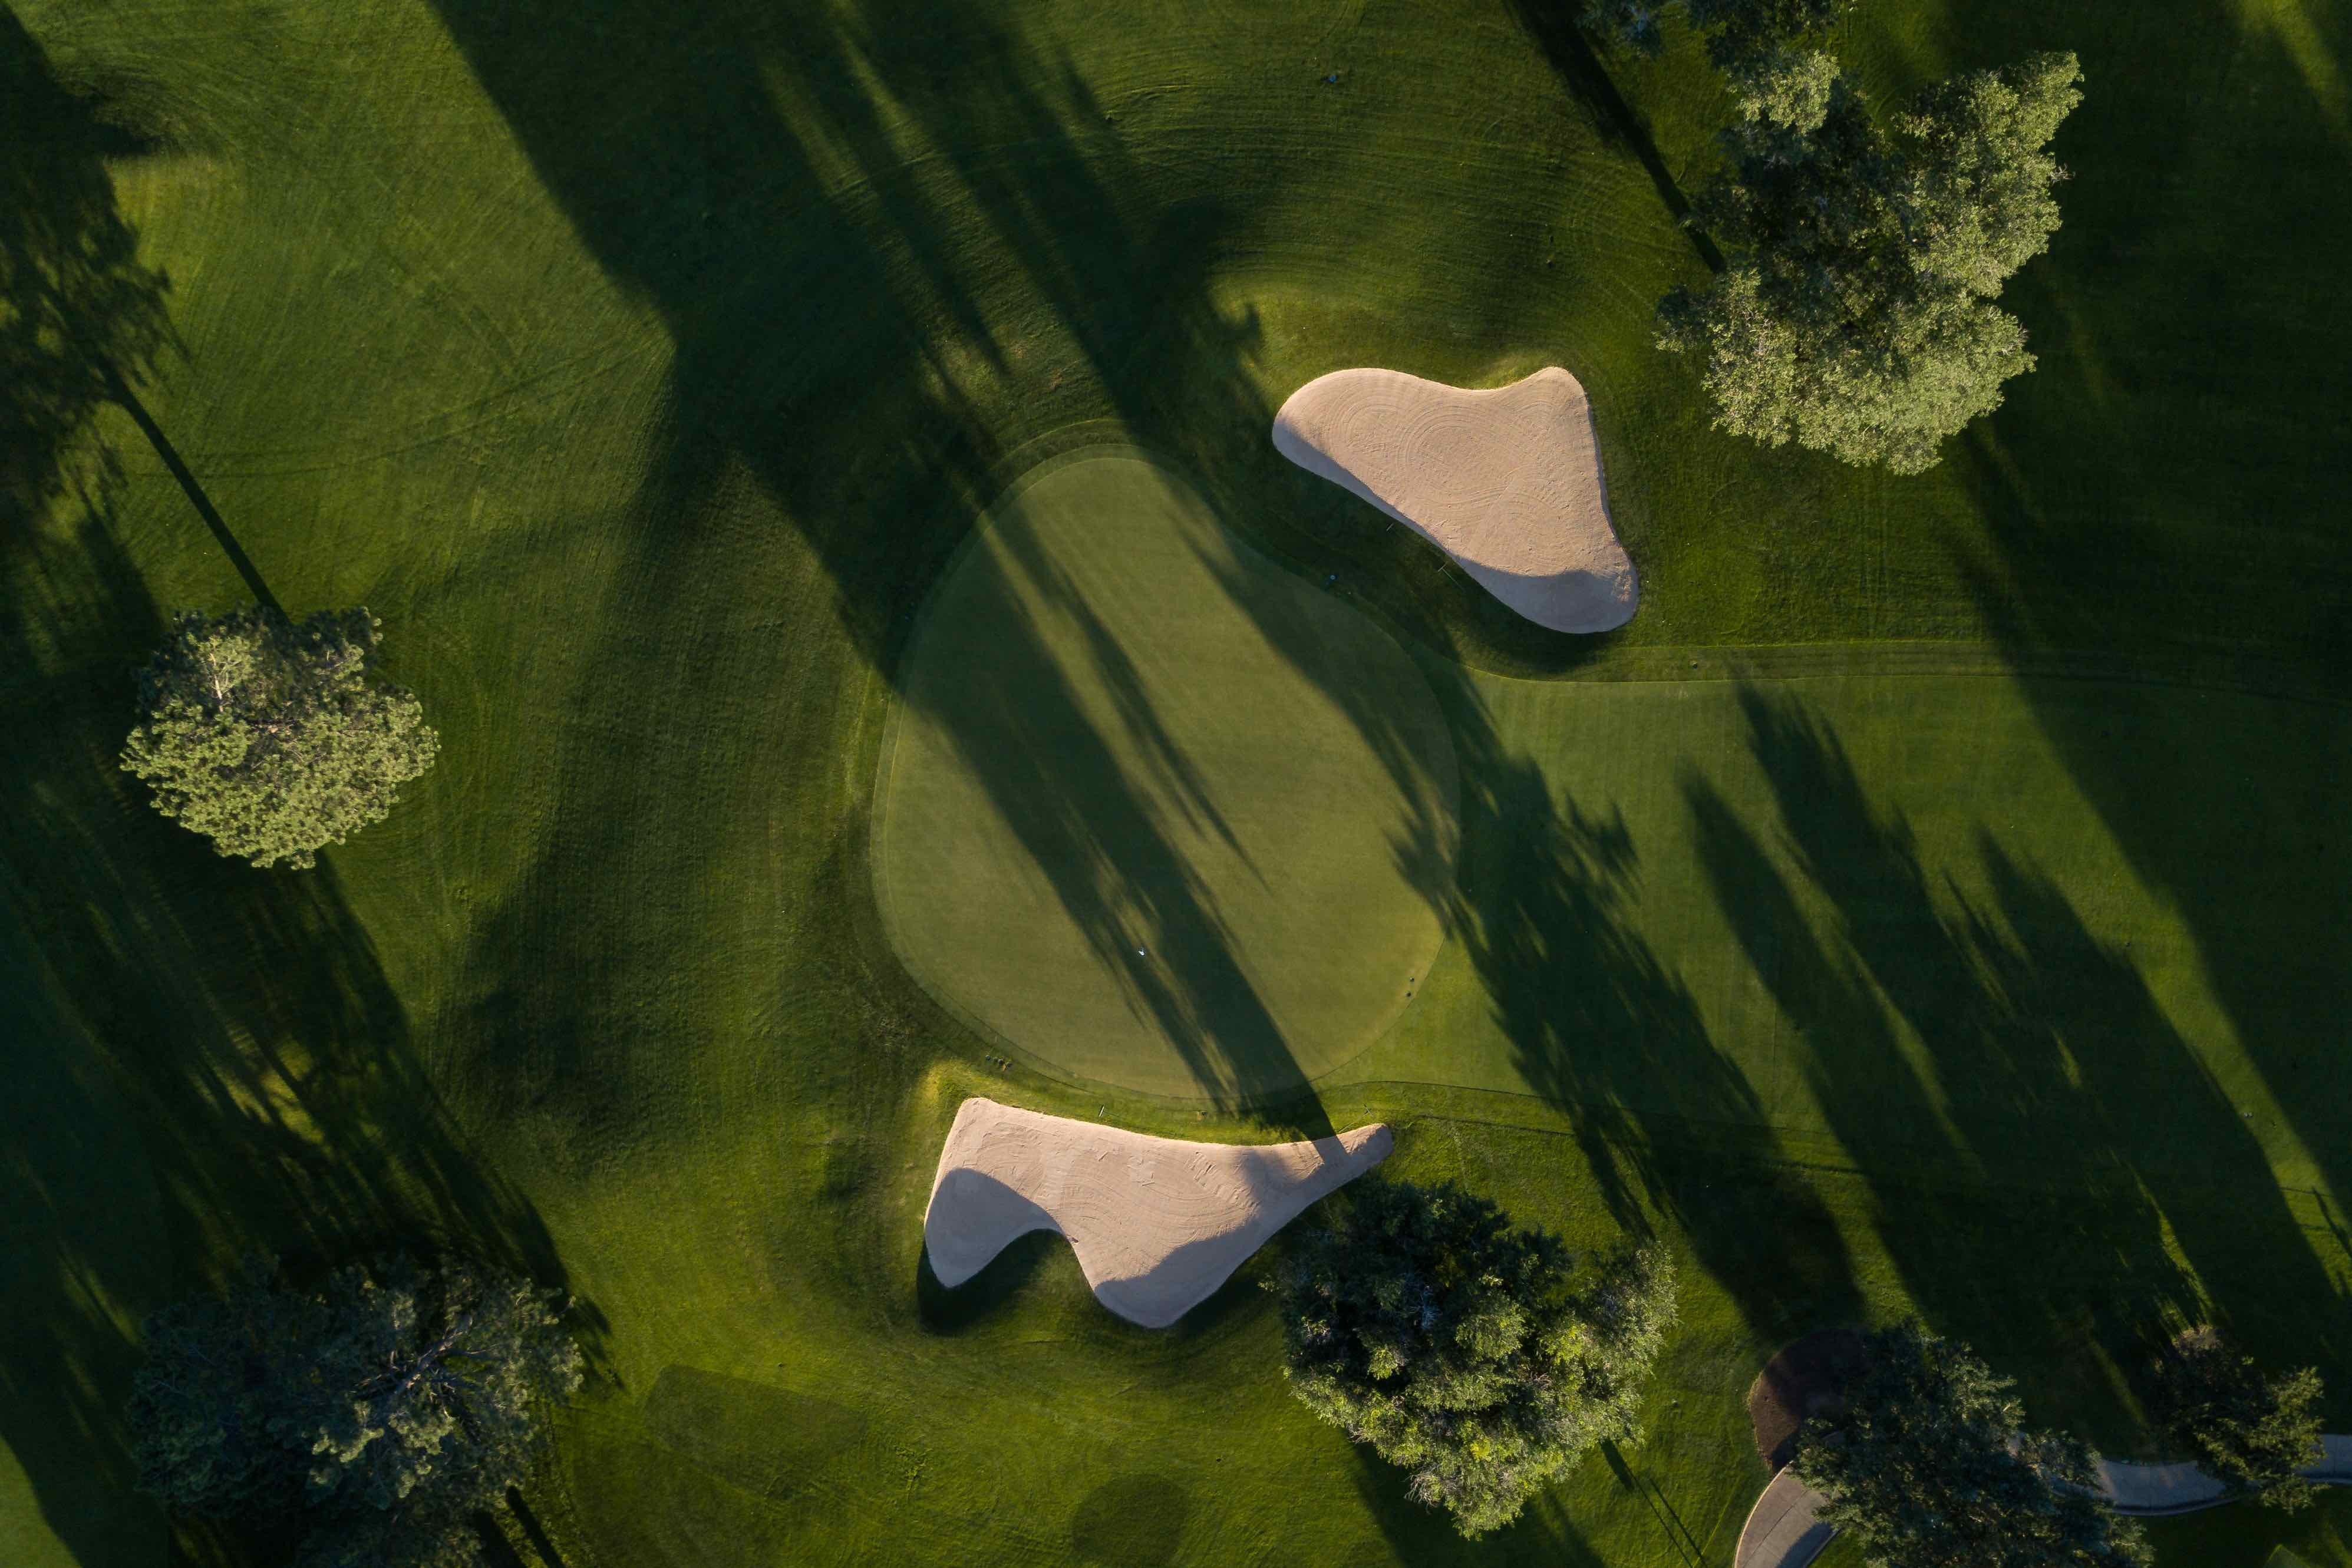 A-Ga-Ming Golf Resort Homes for Sale in Kewadin, Michigan